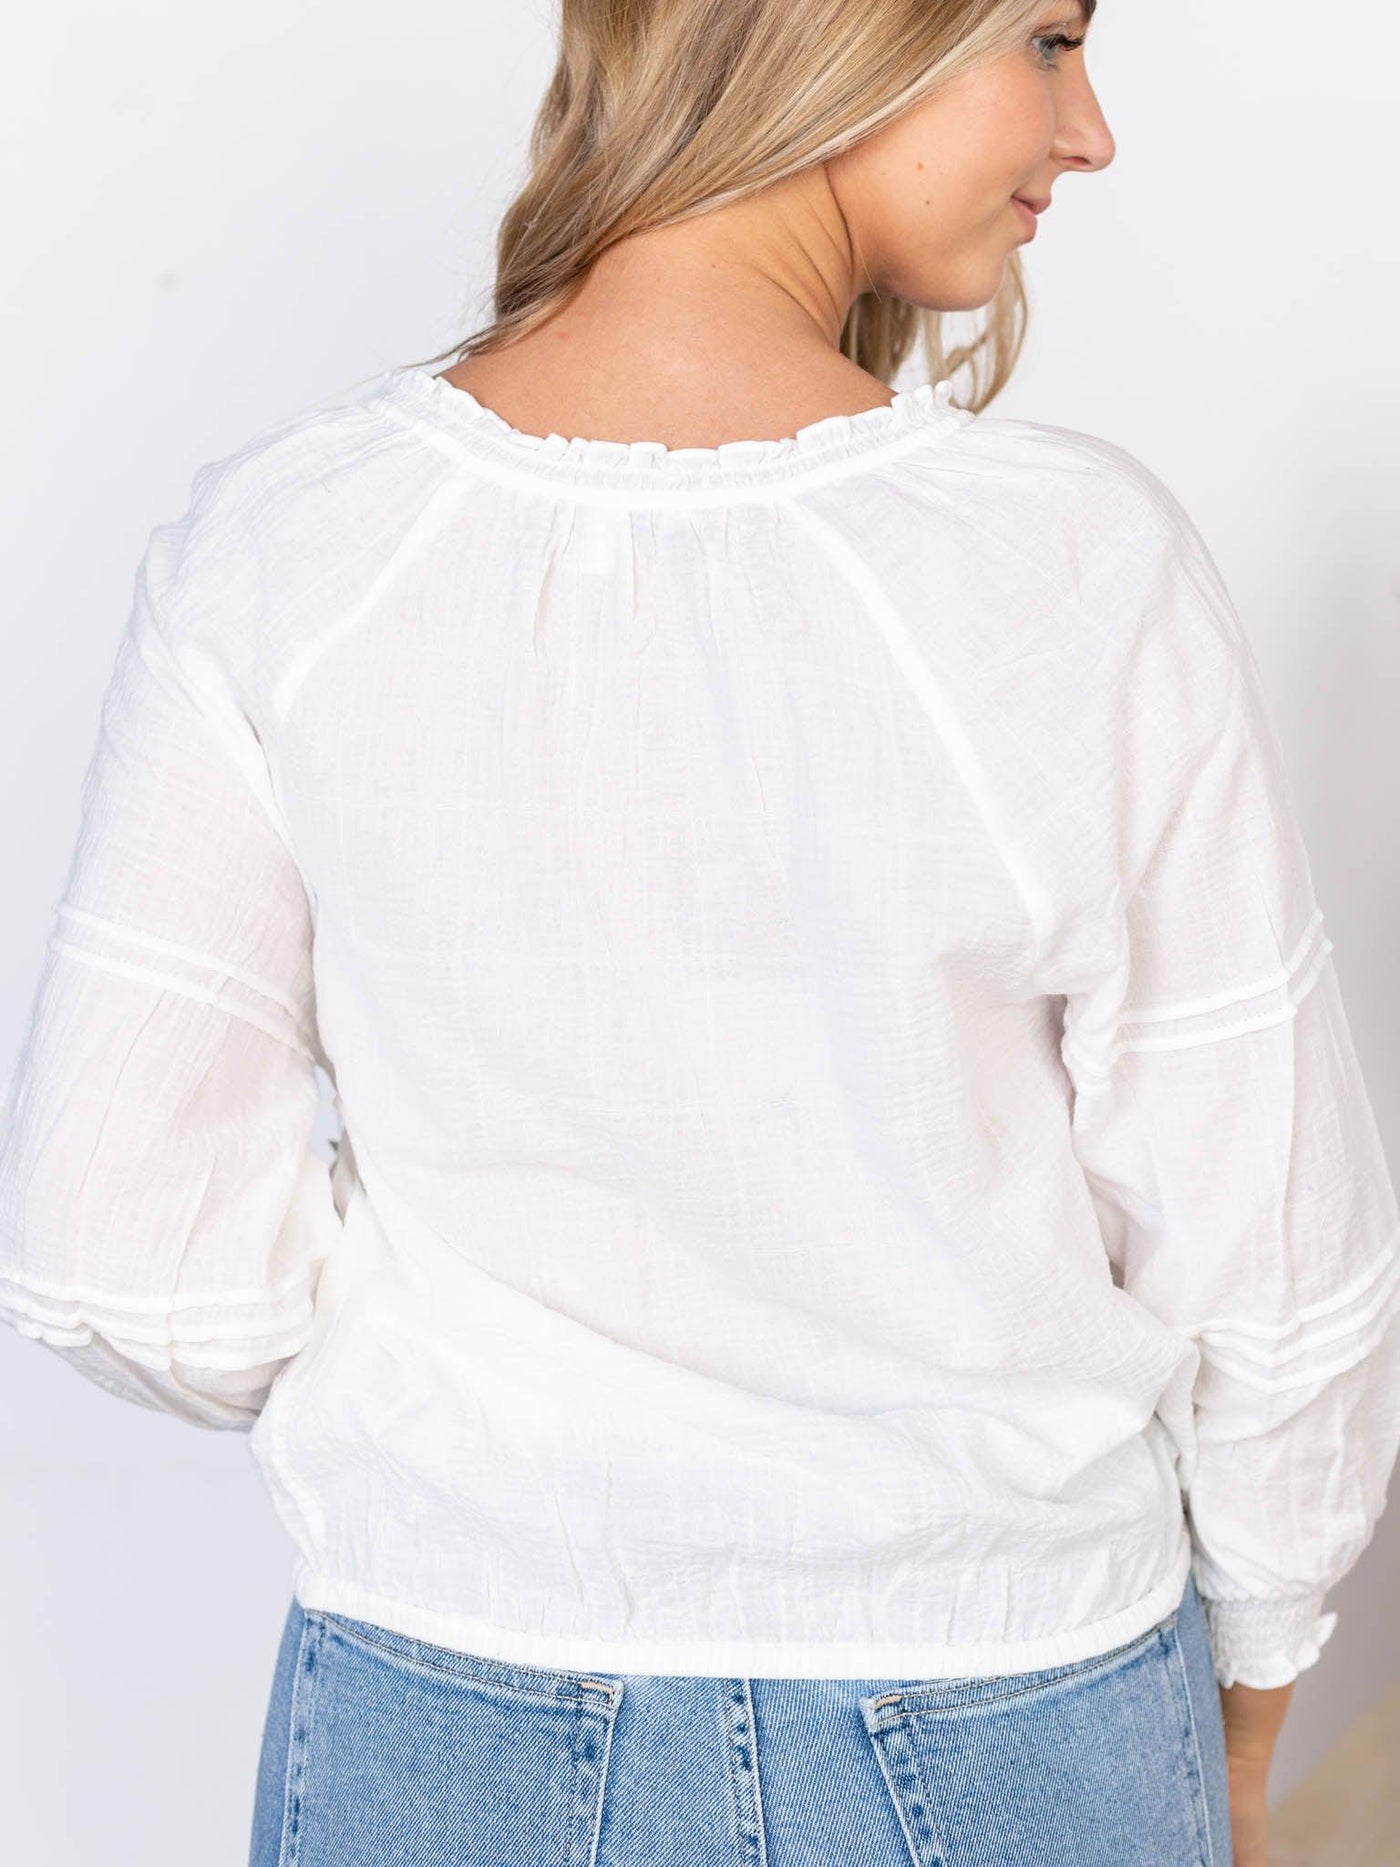 liverpool white blouse